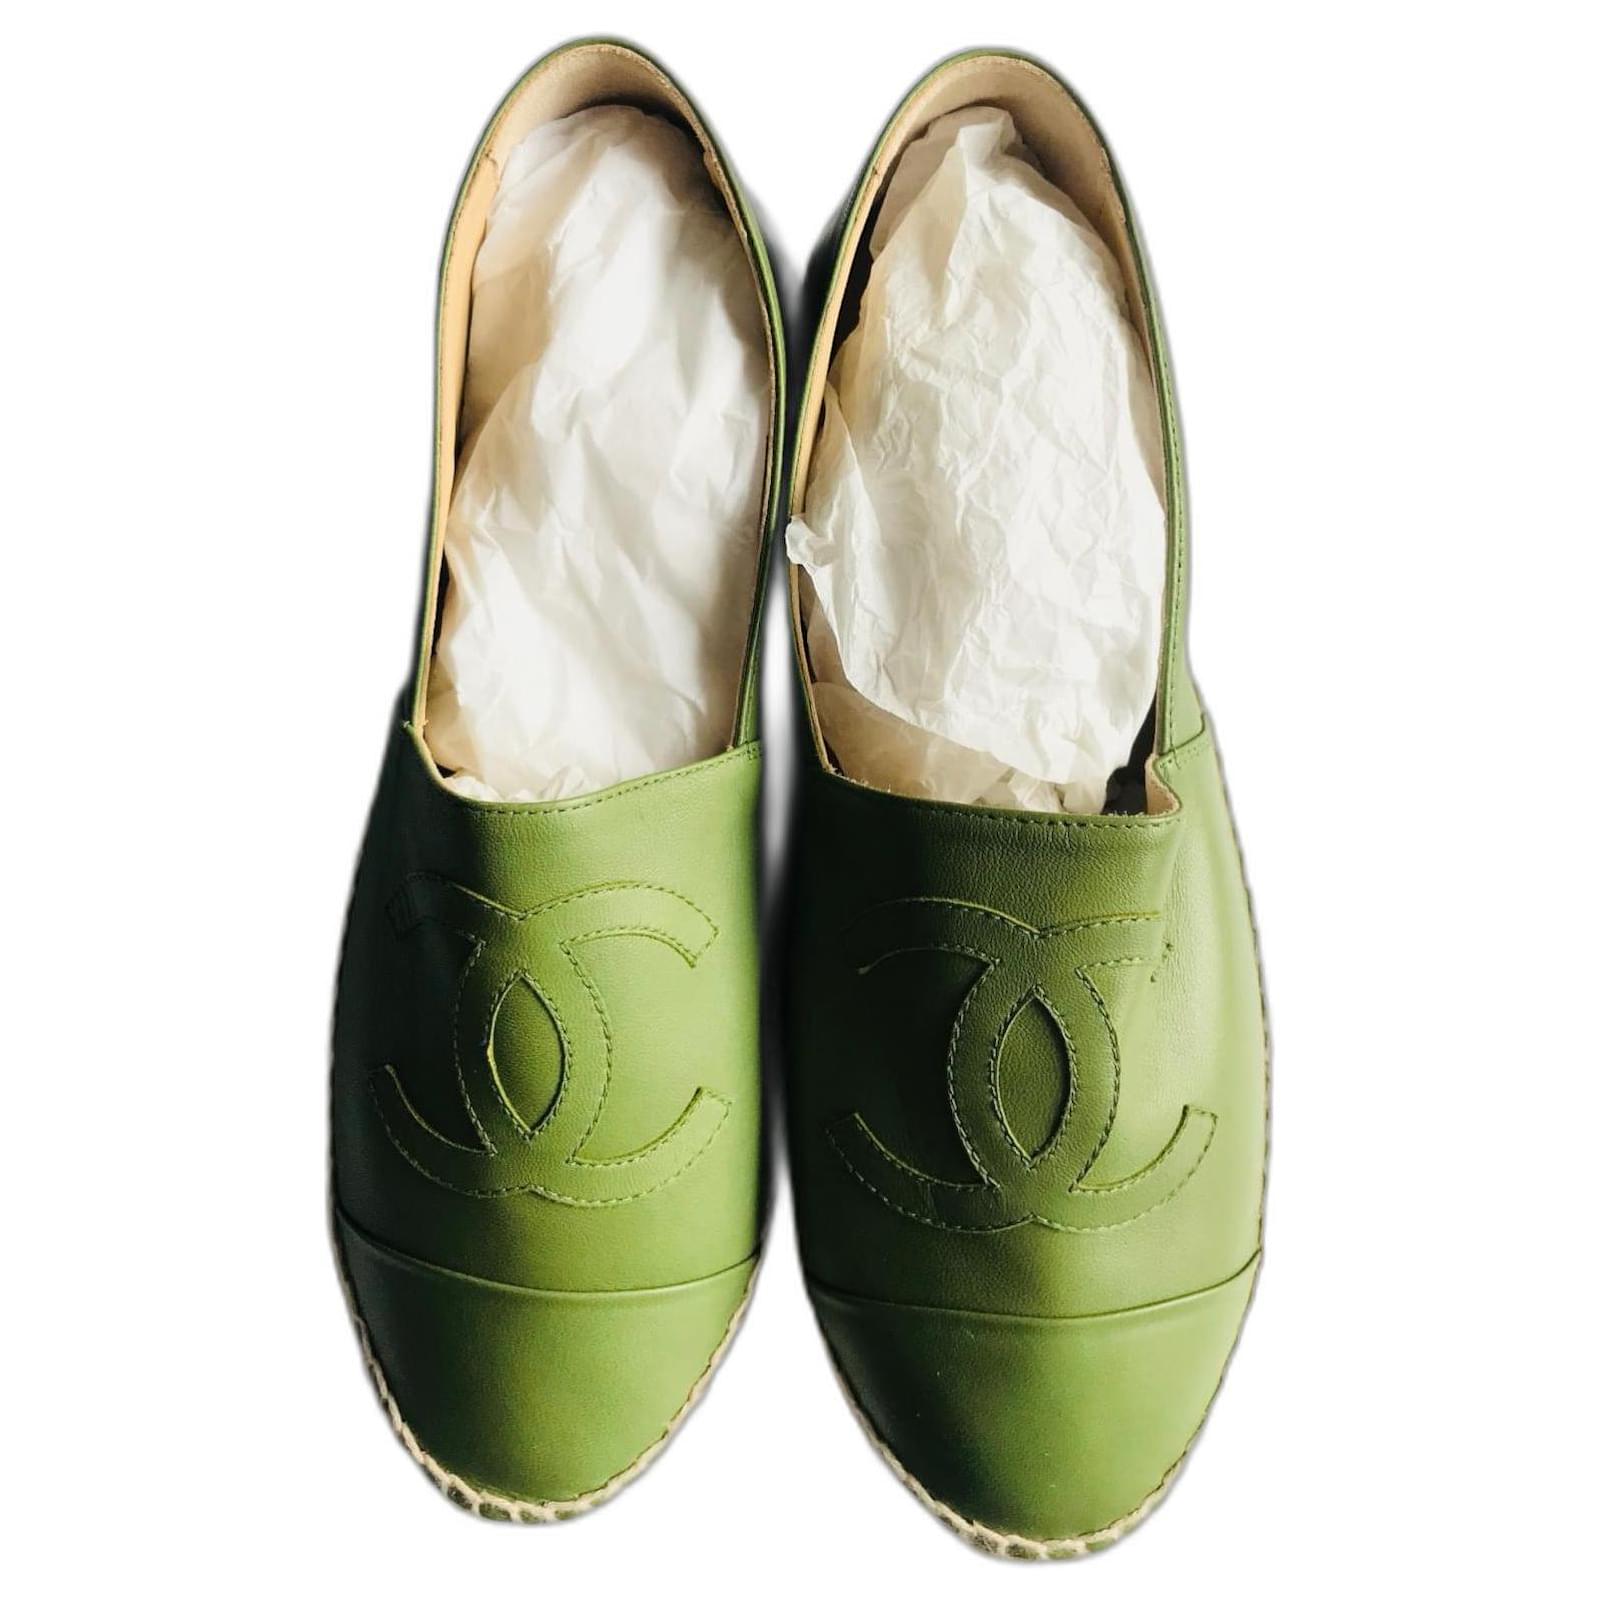 Espadrilles Chanel Green Leather Espadrlles Size 41 EU